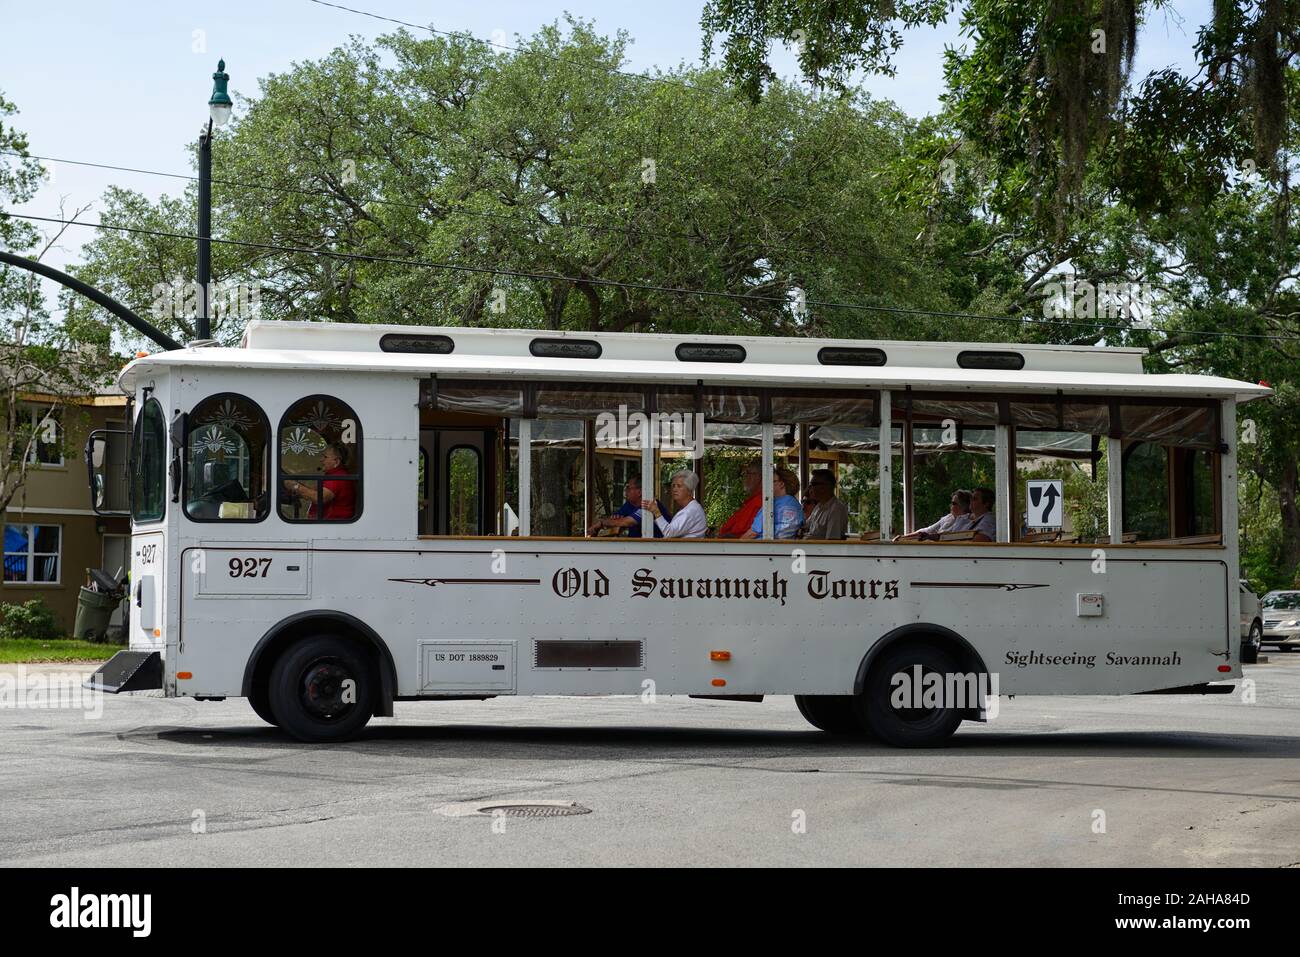 Old Savannah Tours,bus,Savannah’s Historic District,tourism,sightseeing,tour,buses,ride and go,Savannah, GA, RM USA Stock Photo